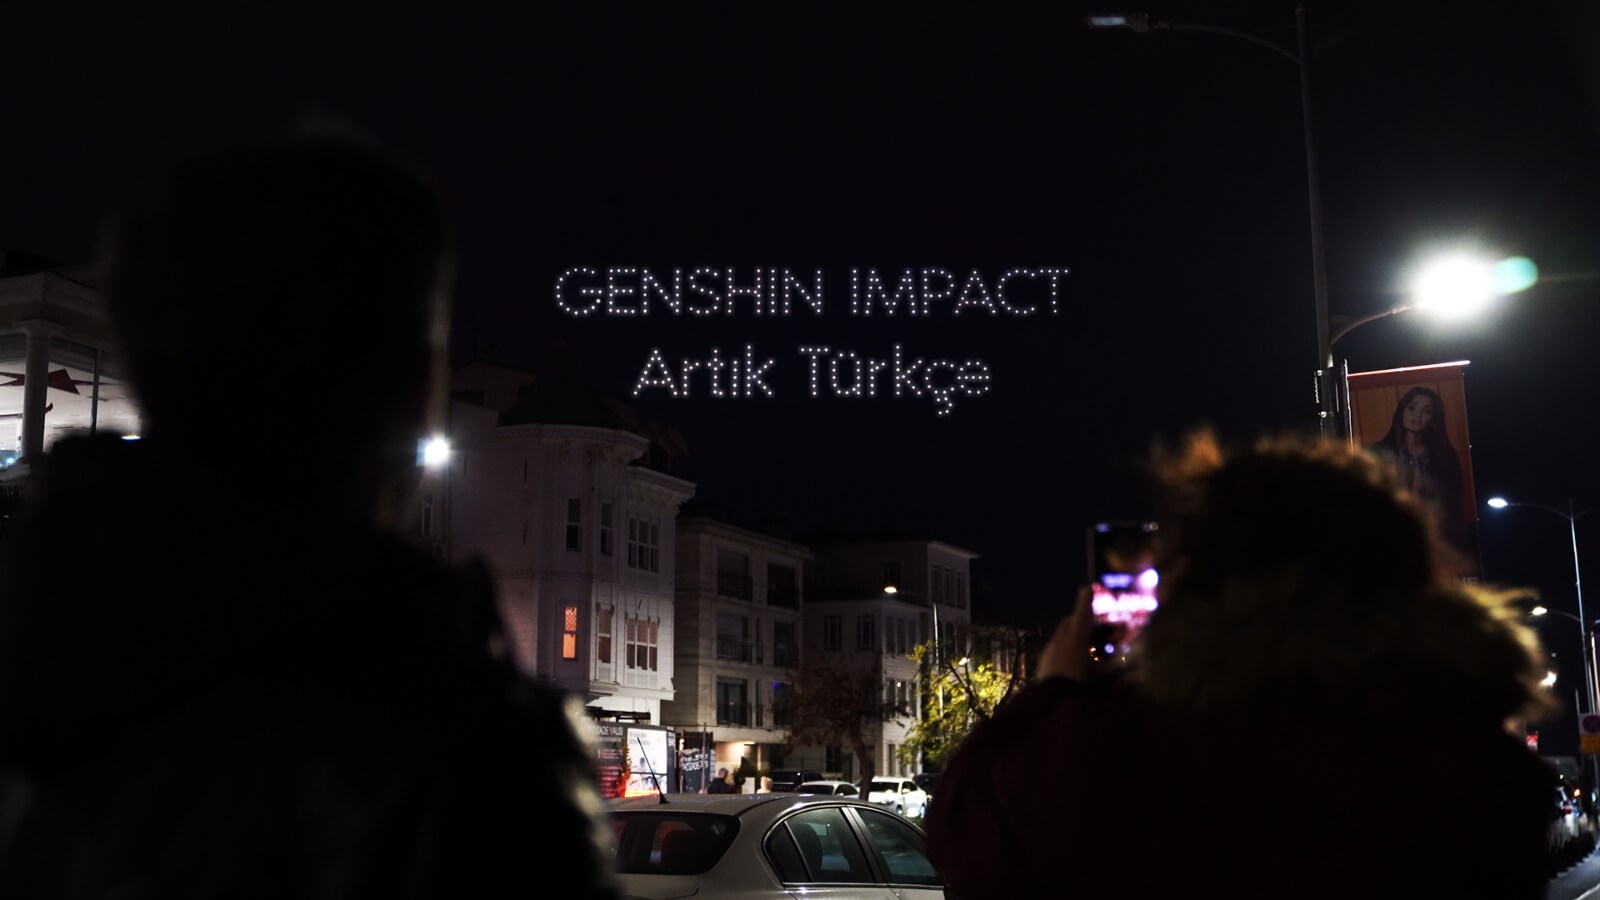 genshin impact turkce dilinin eklenisini drone isik gosterisiyle kutladi 1